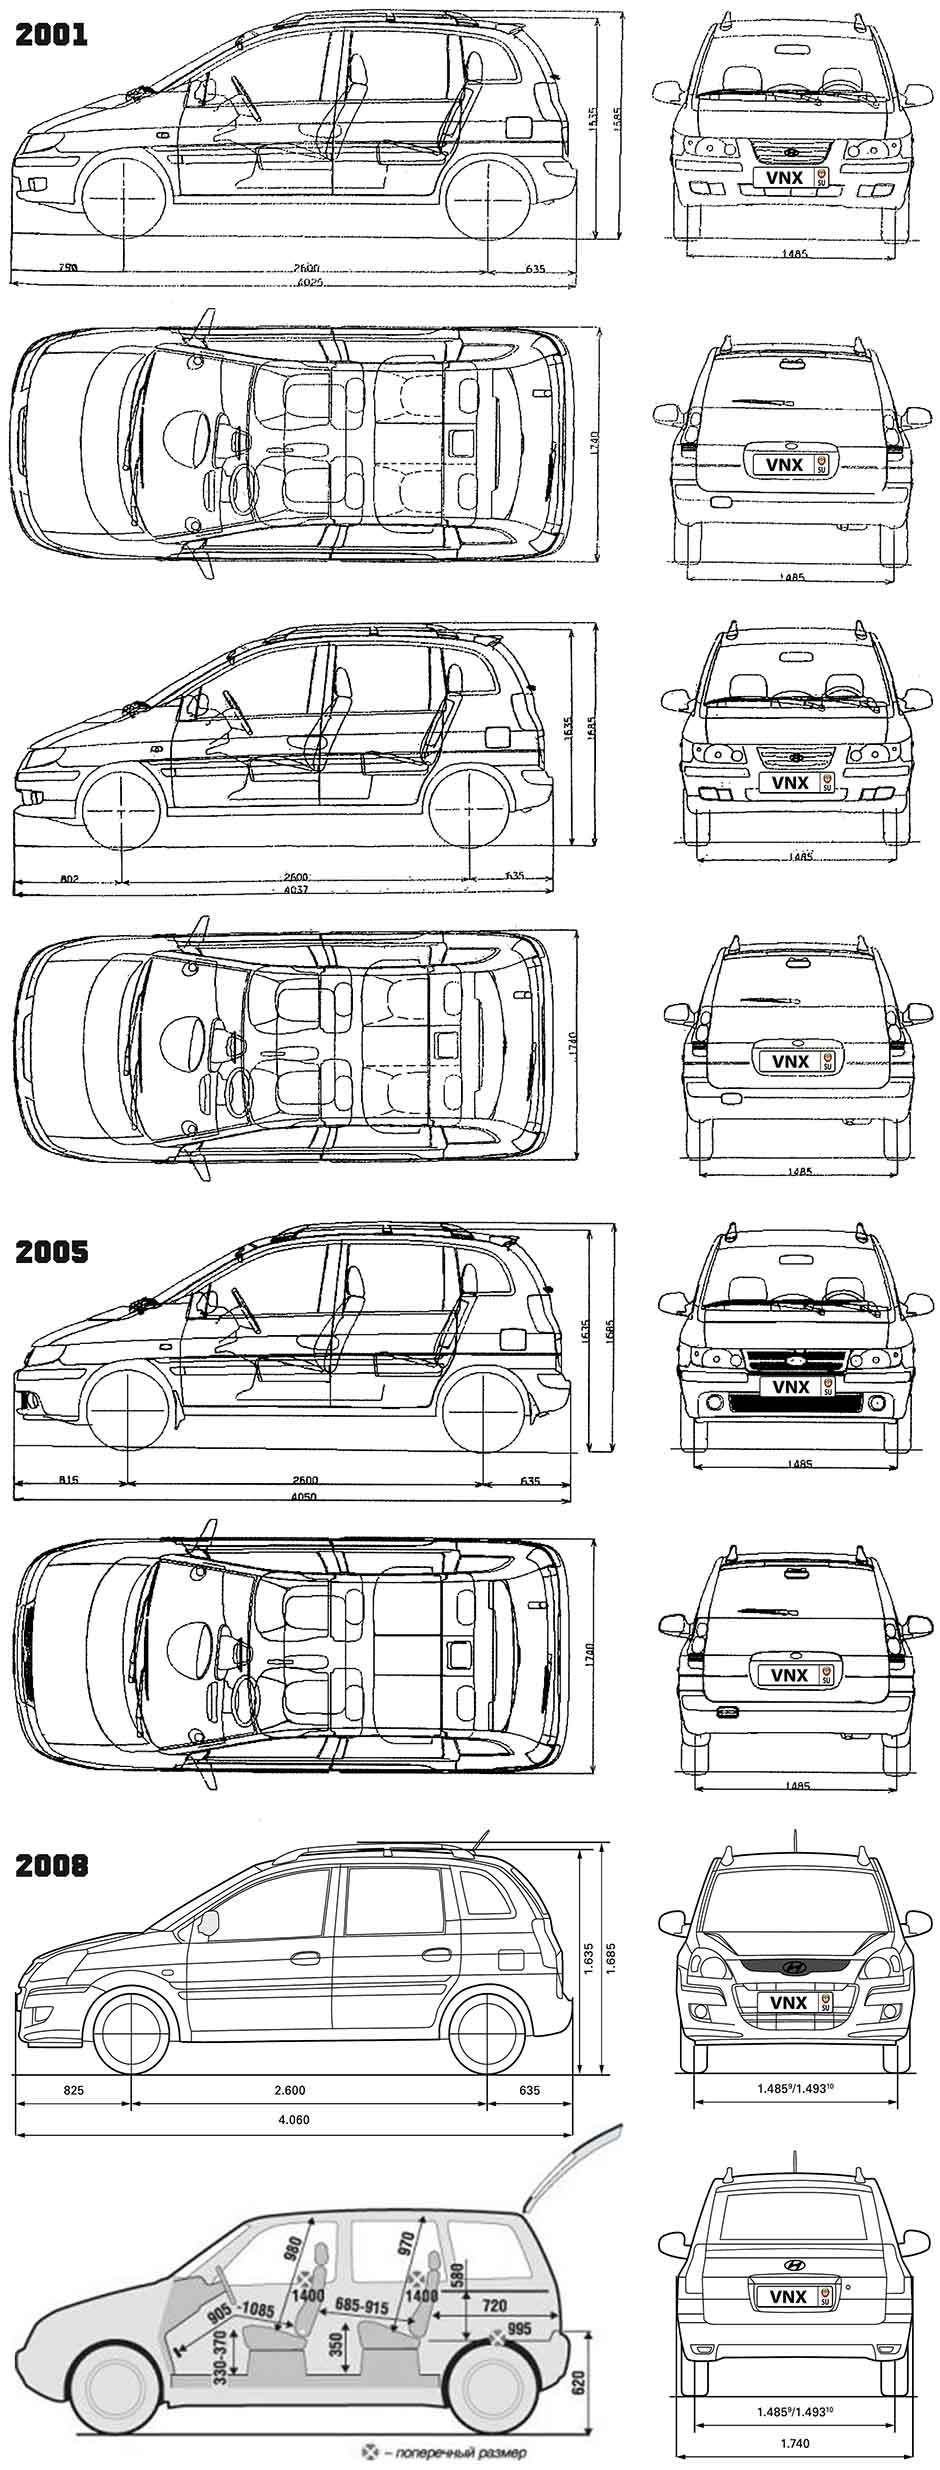 Габаритные размеры Хундай Матрикс 2001-2010 (dimensions Hyundai Matrix)